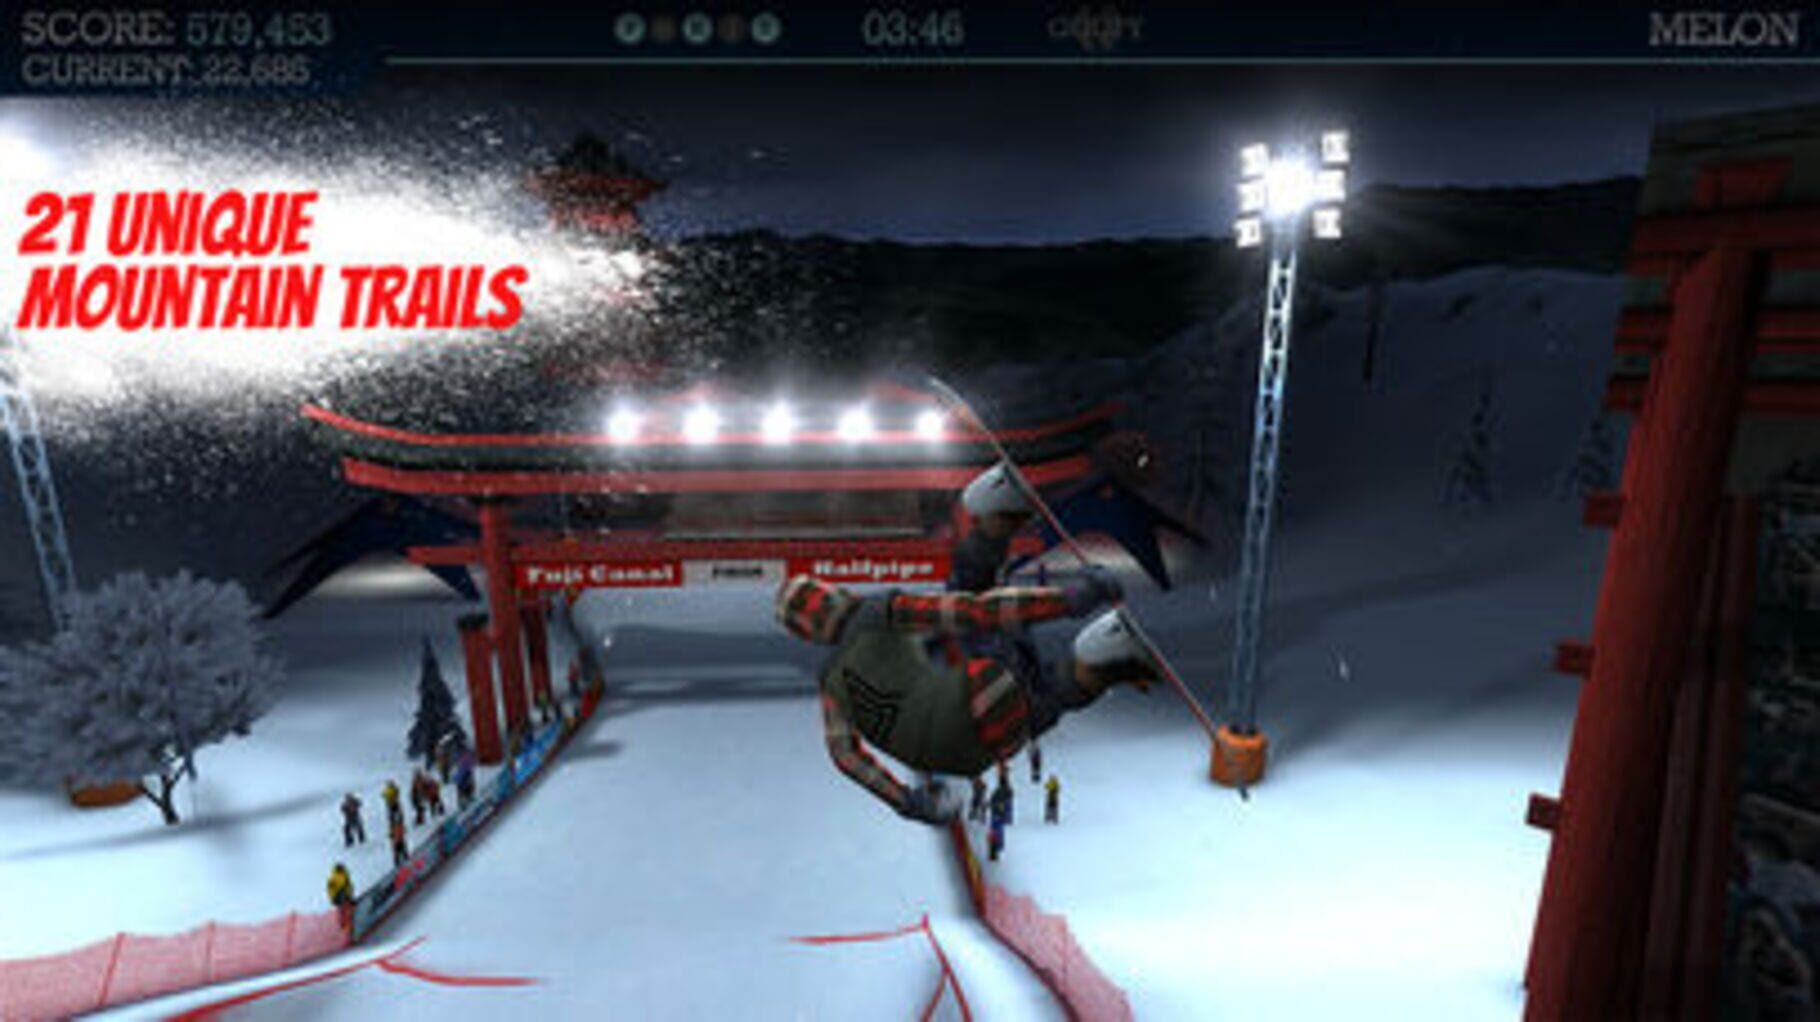 Snowboard Party Pro screenshots